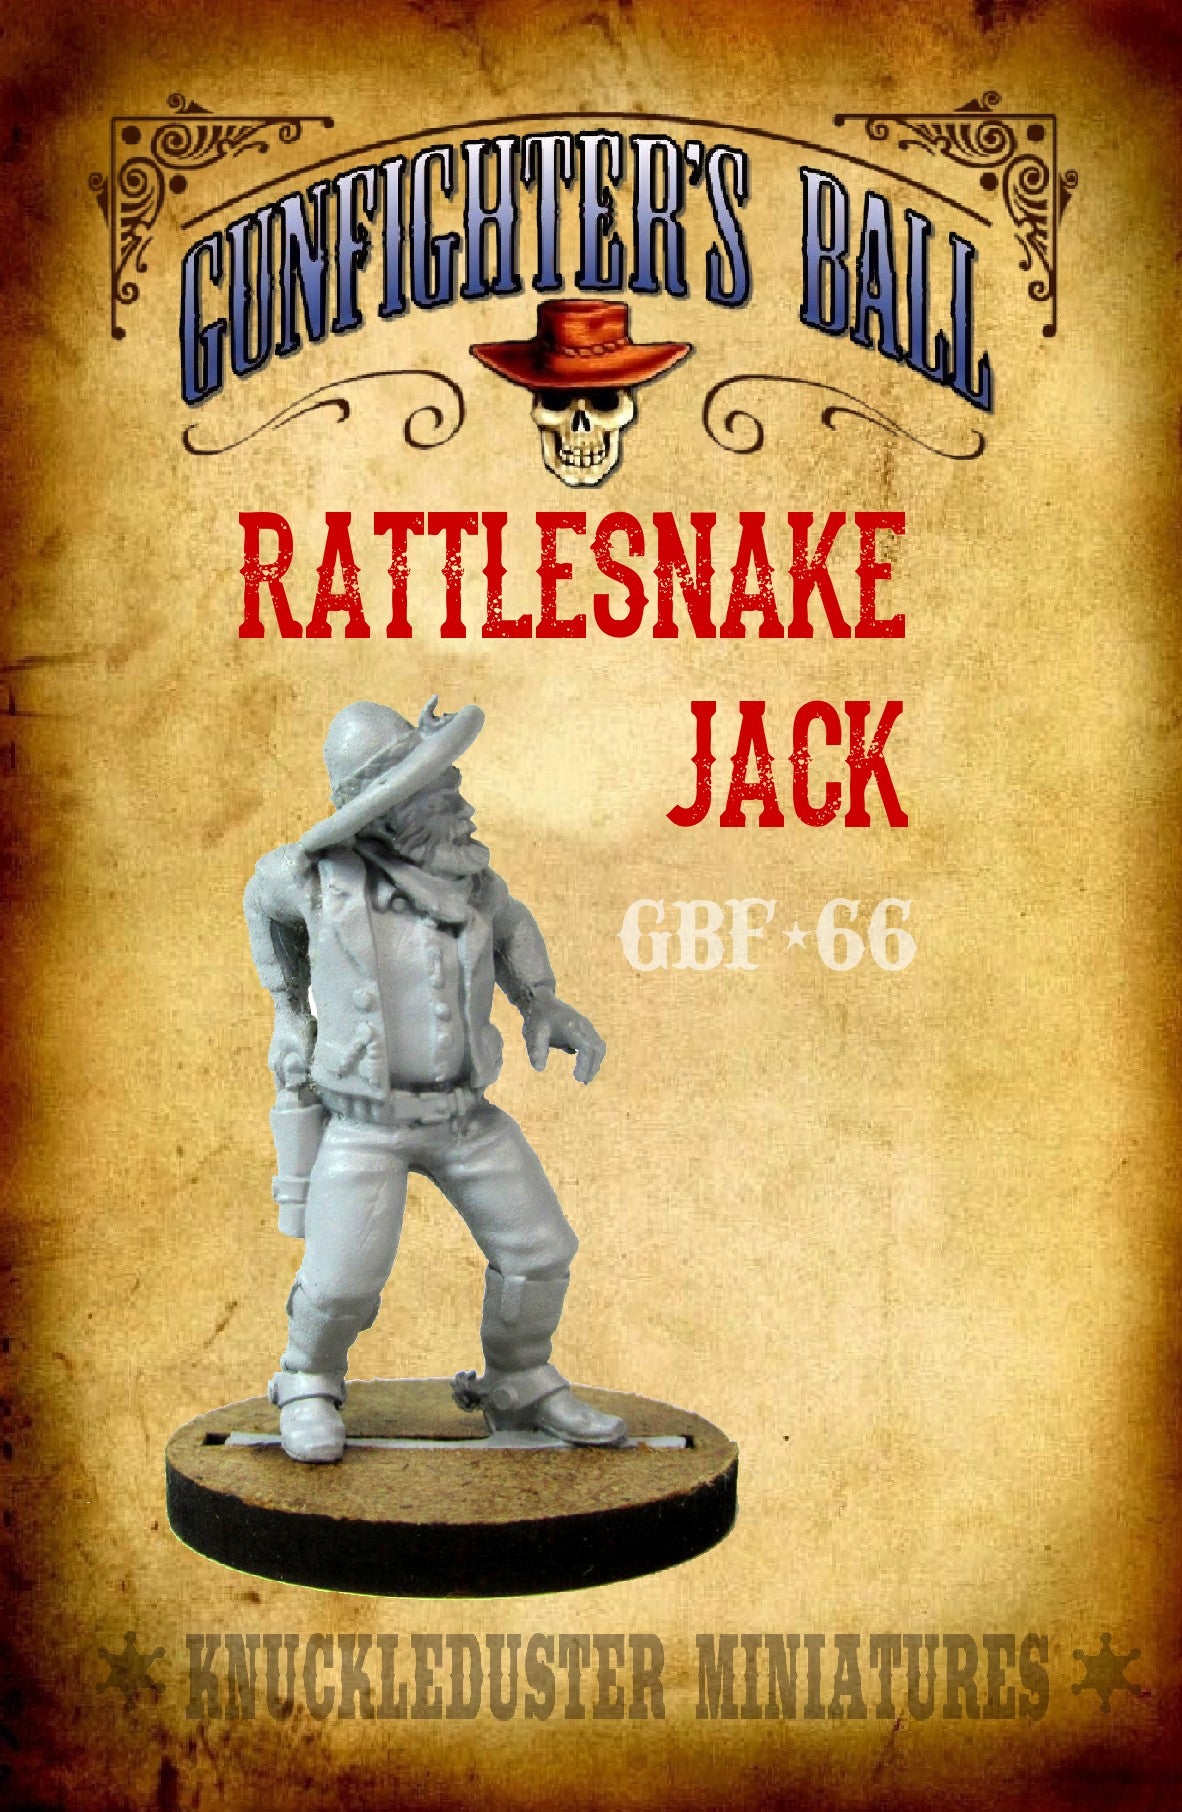 Rattlesnake Jack